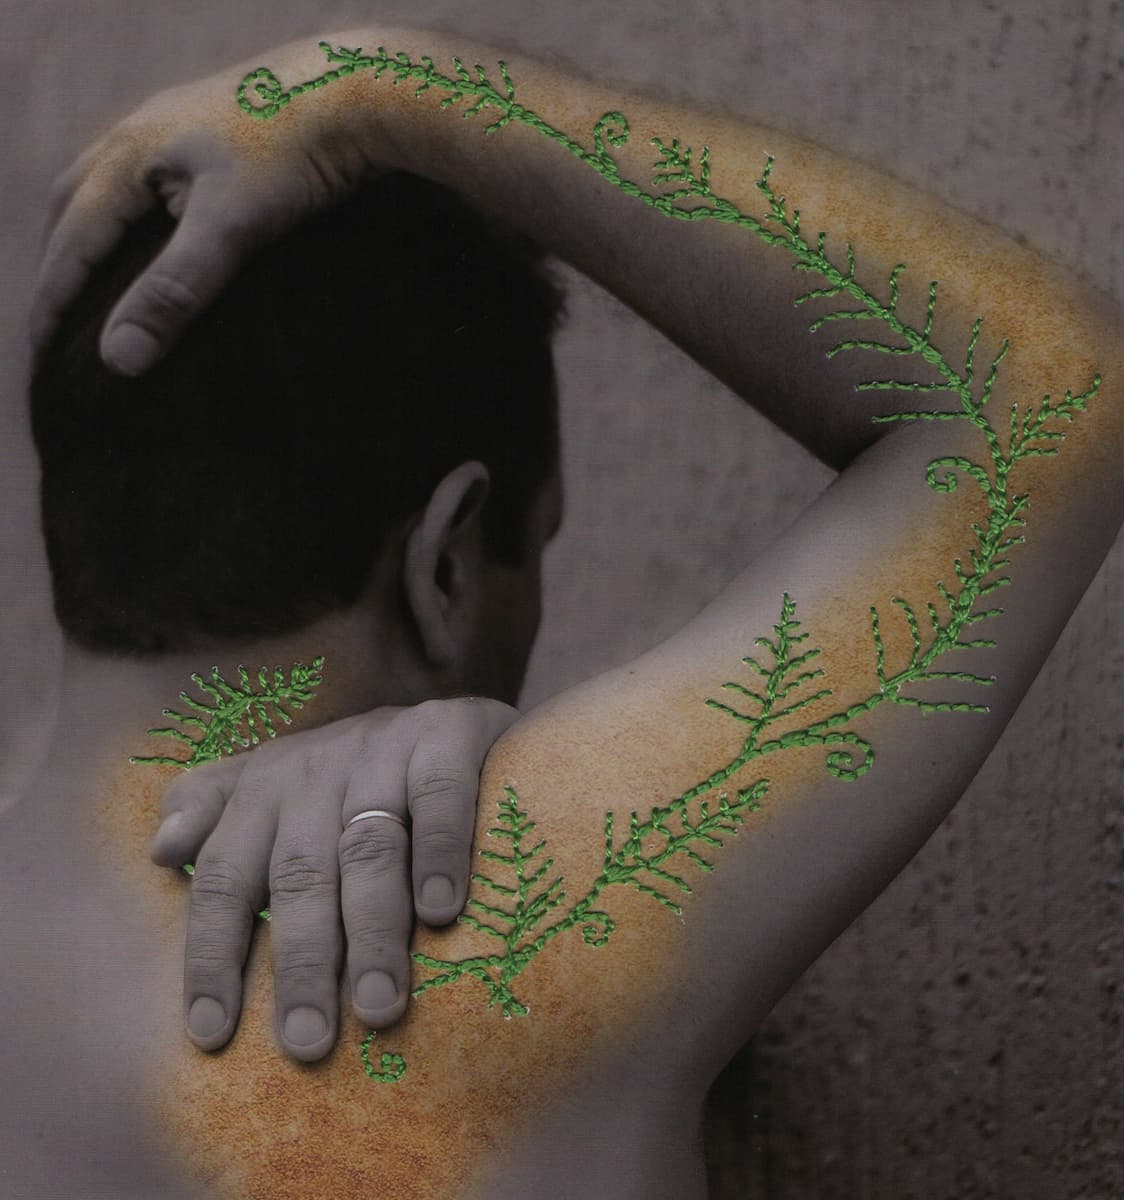 Work "Shadows of pain Dioscorea sp" by Veruska Bahiense. Photo: Disclosure.